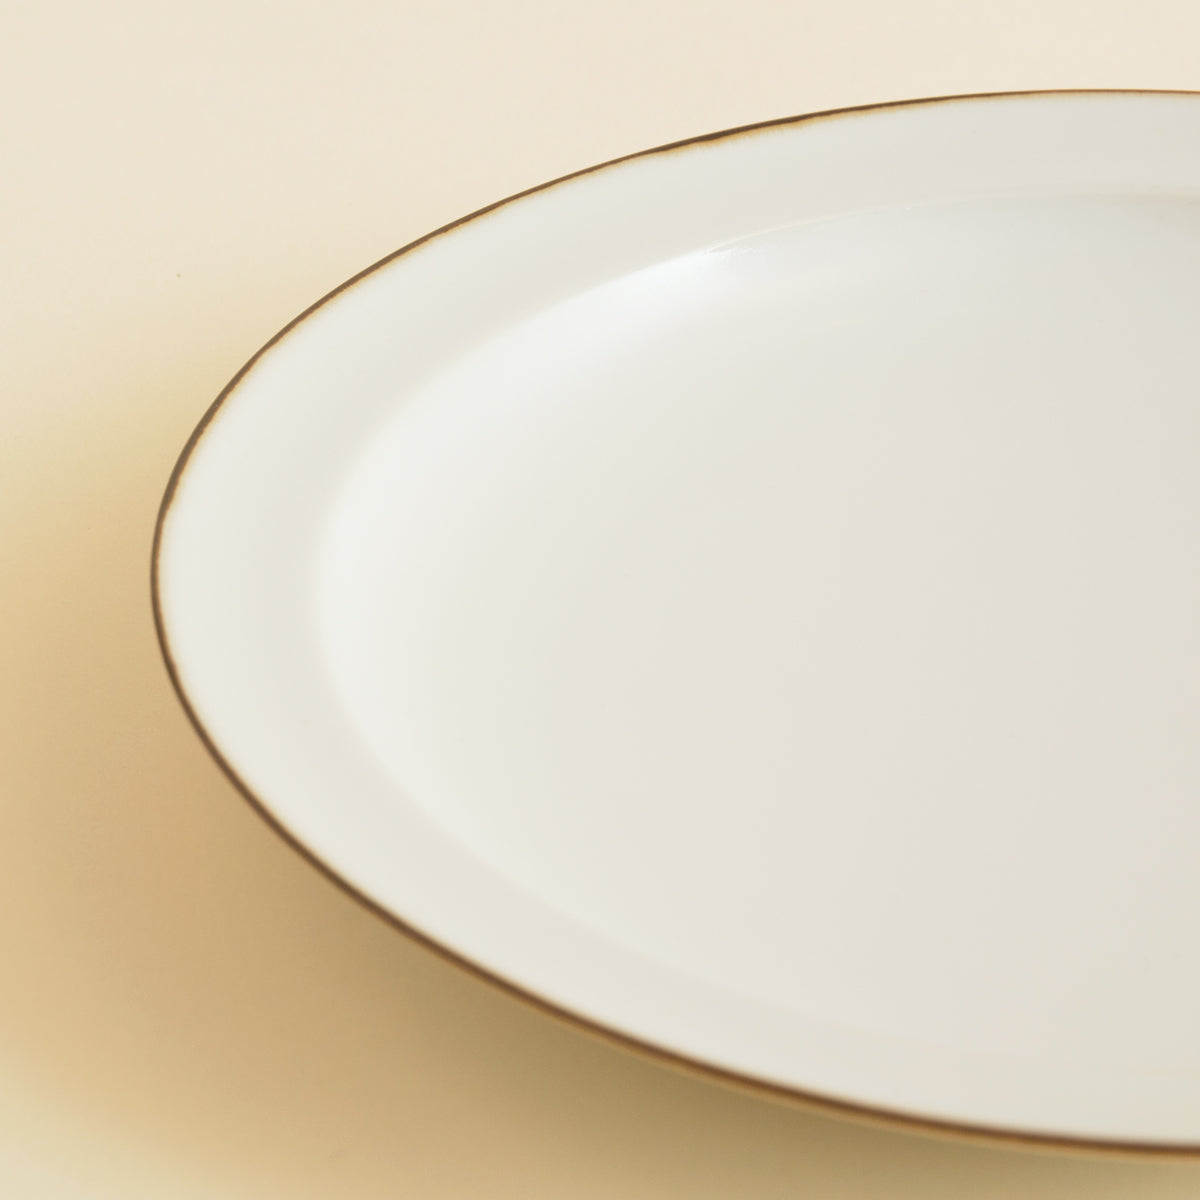 Porcelain Plate - Accented Rim